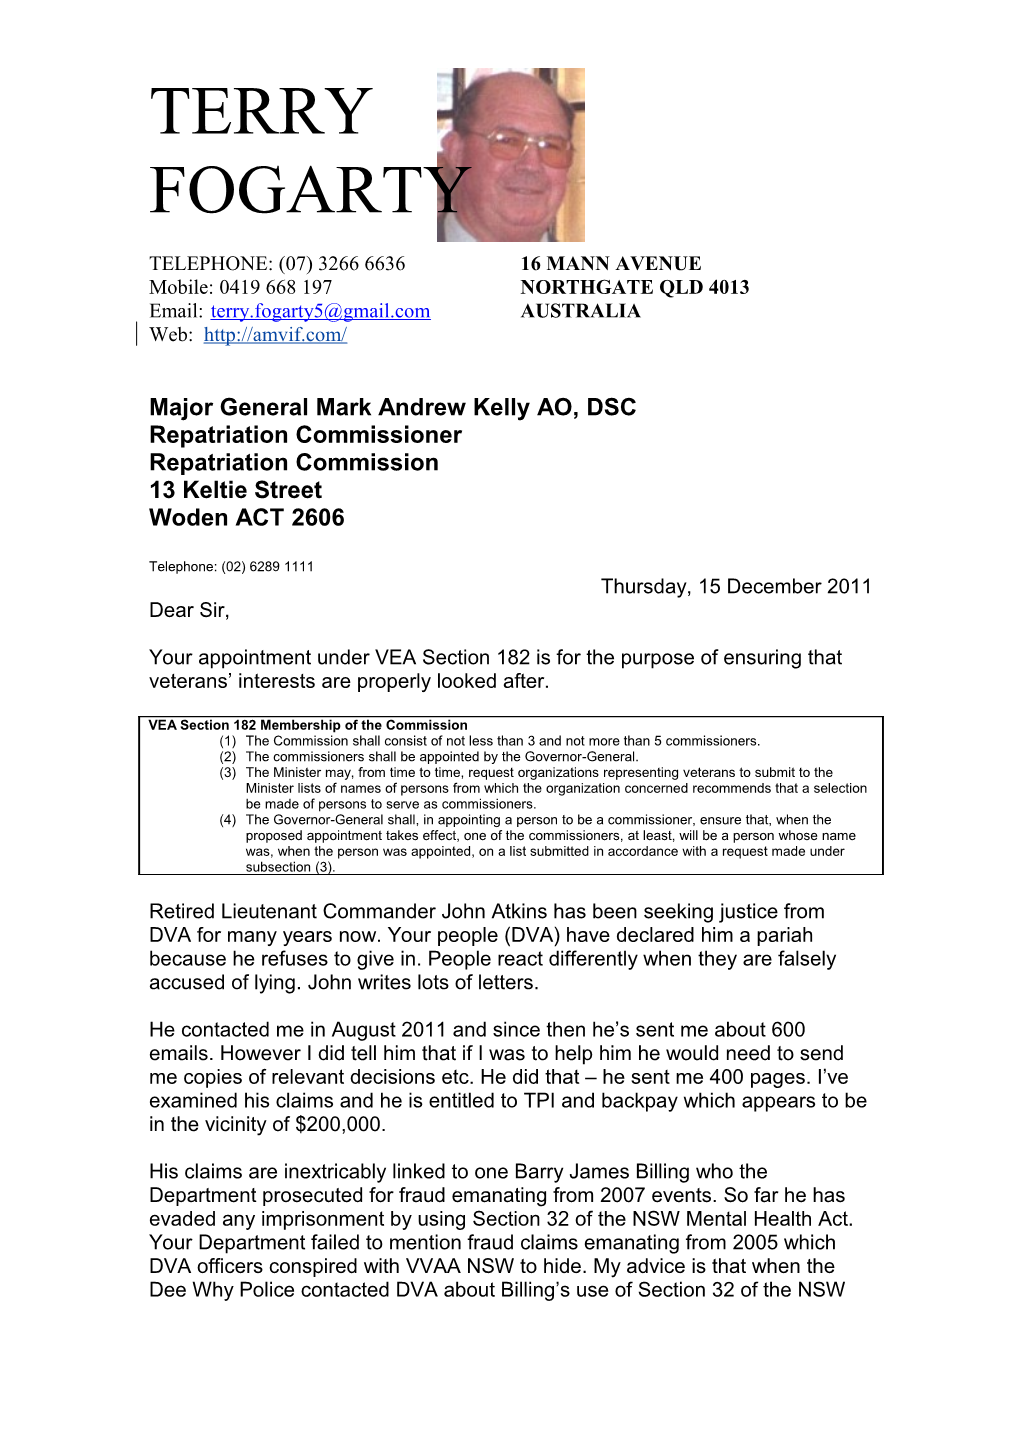 Major General Mark Andrew Kelly AO, DSC